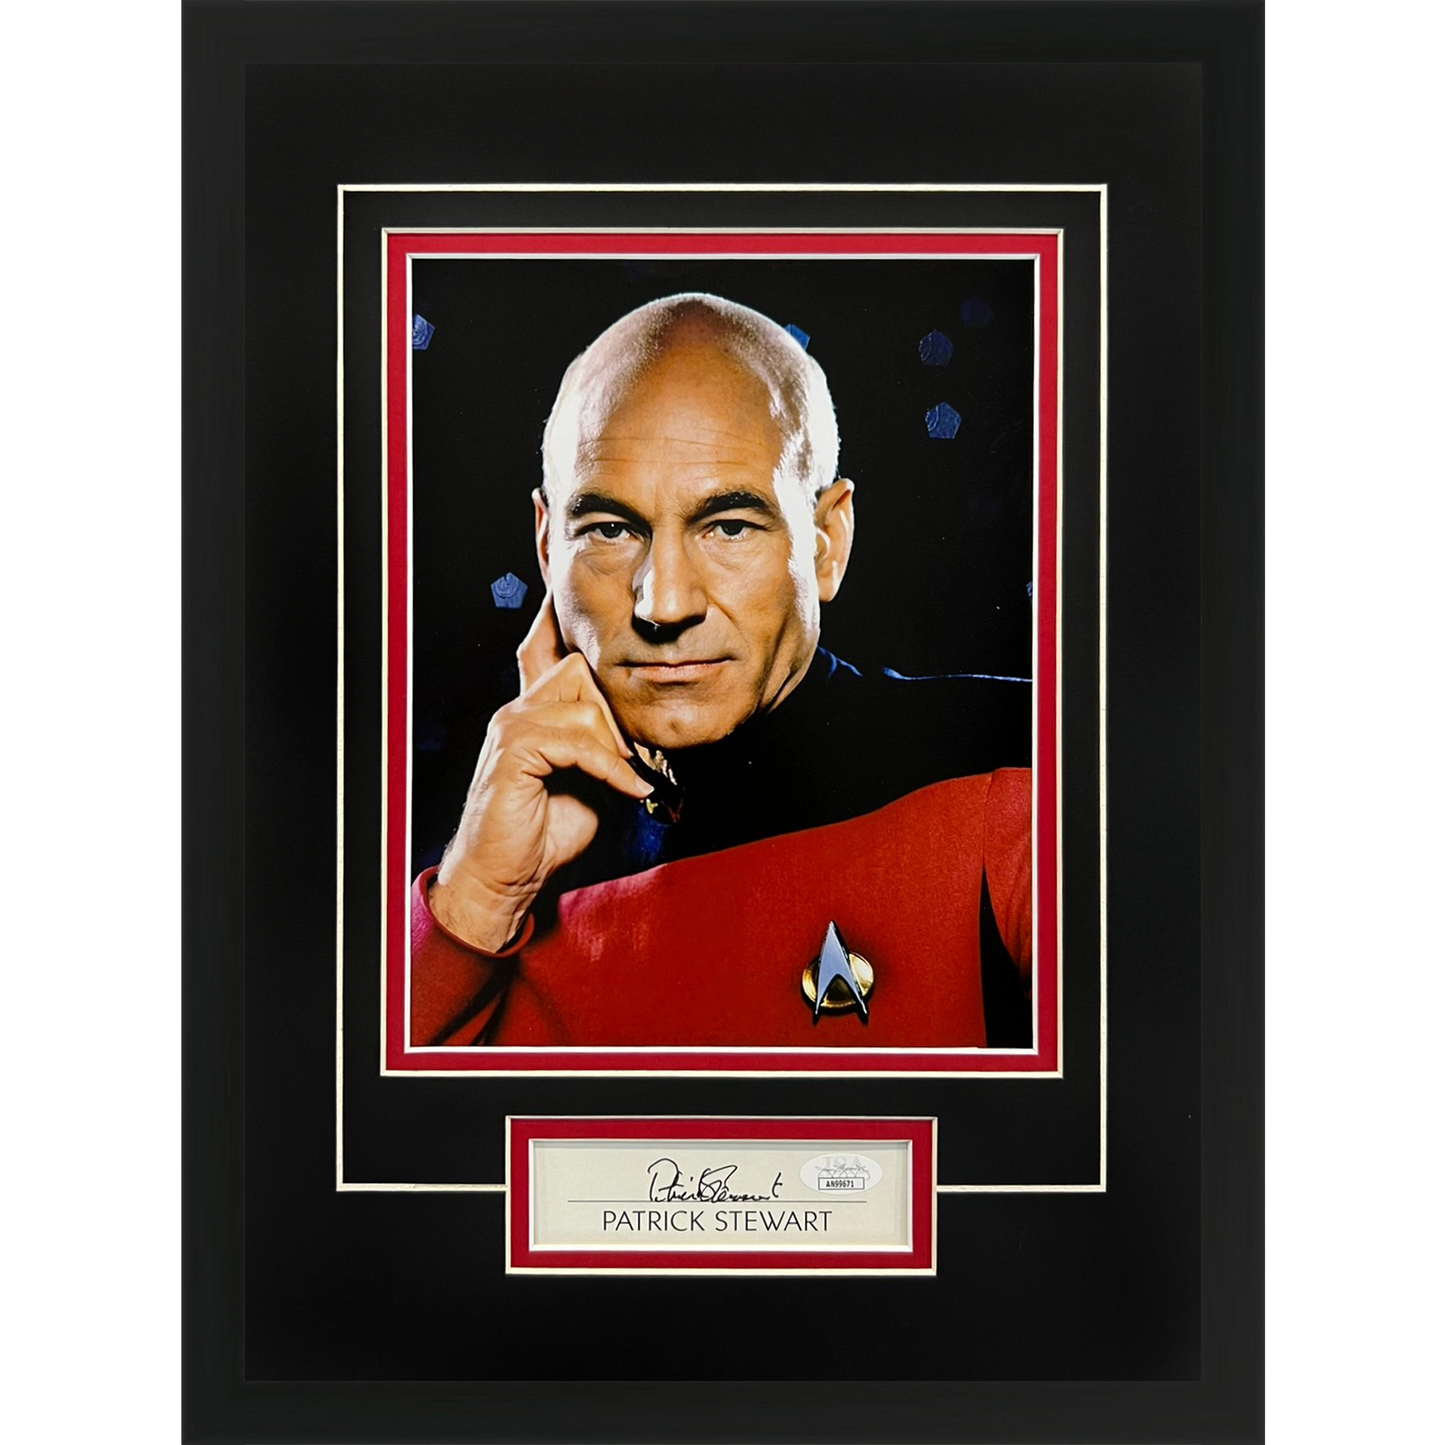 Patrick Stewart Autographed Star Trek 8x10 Photo Signature Series Frame - JSA